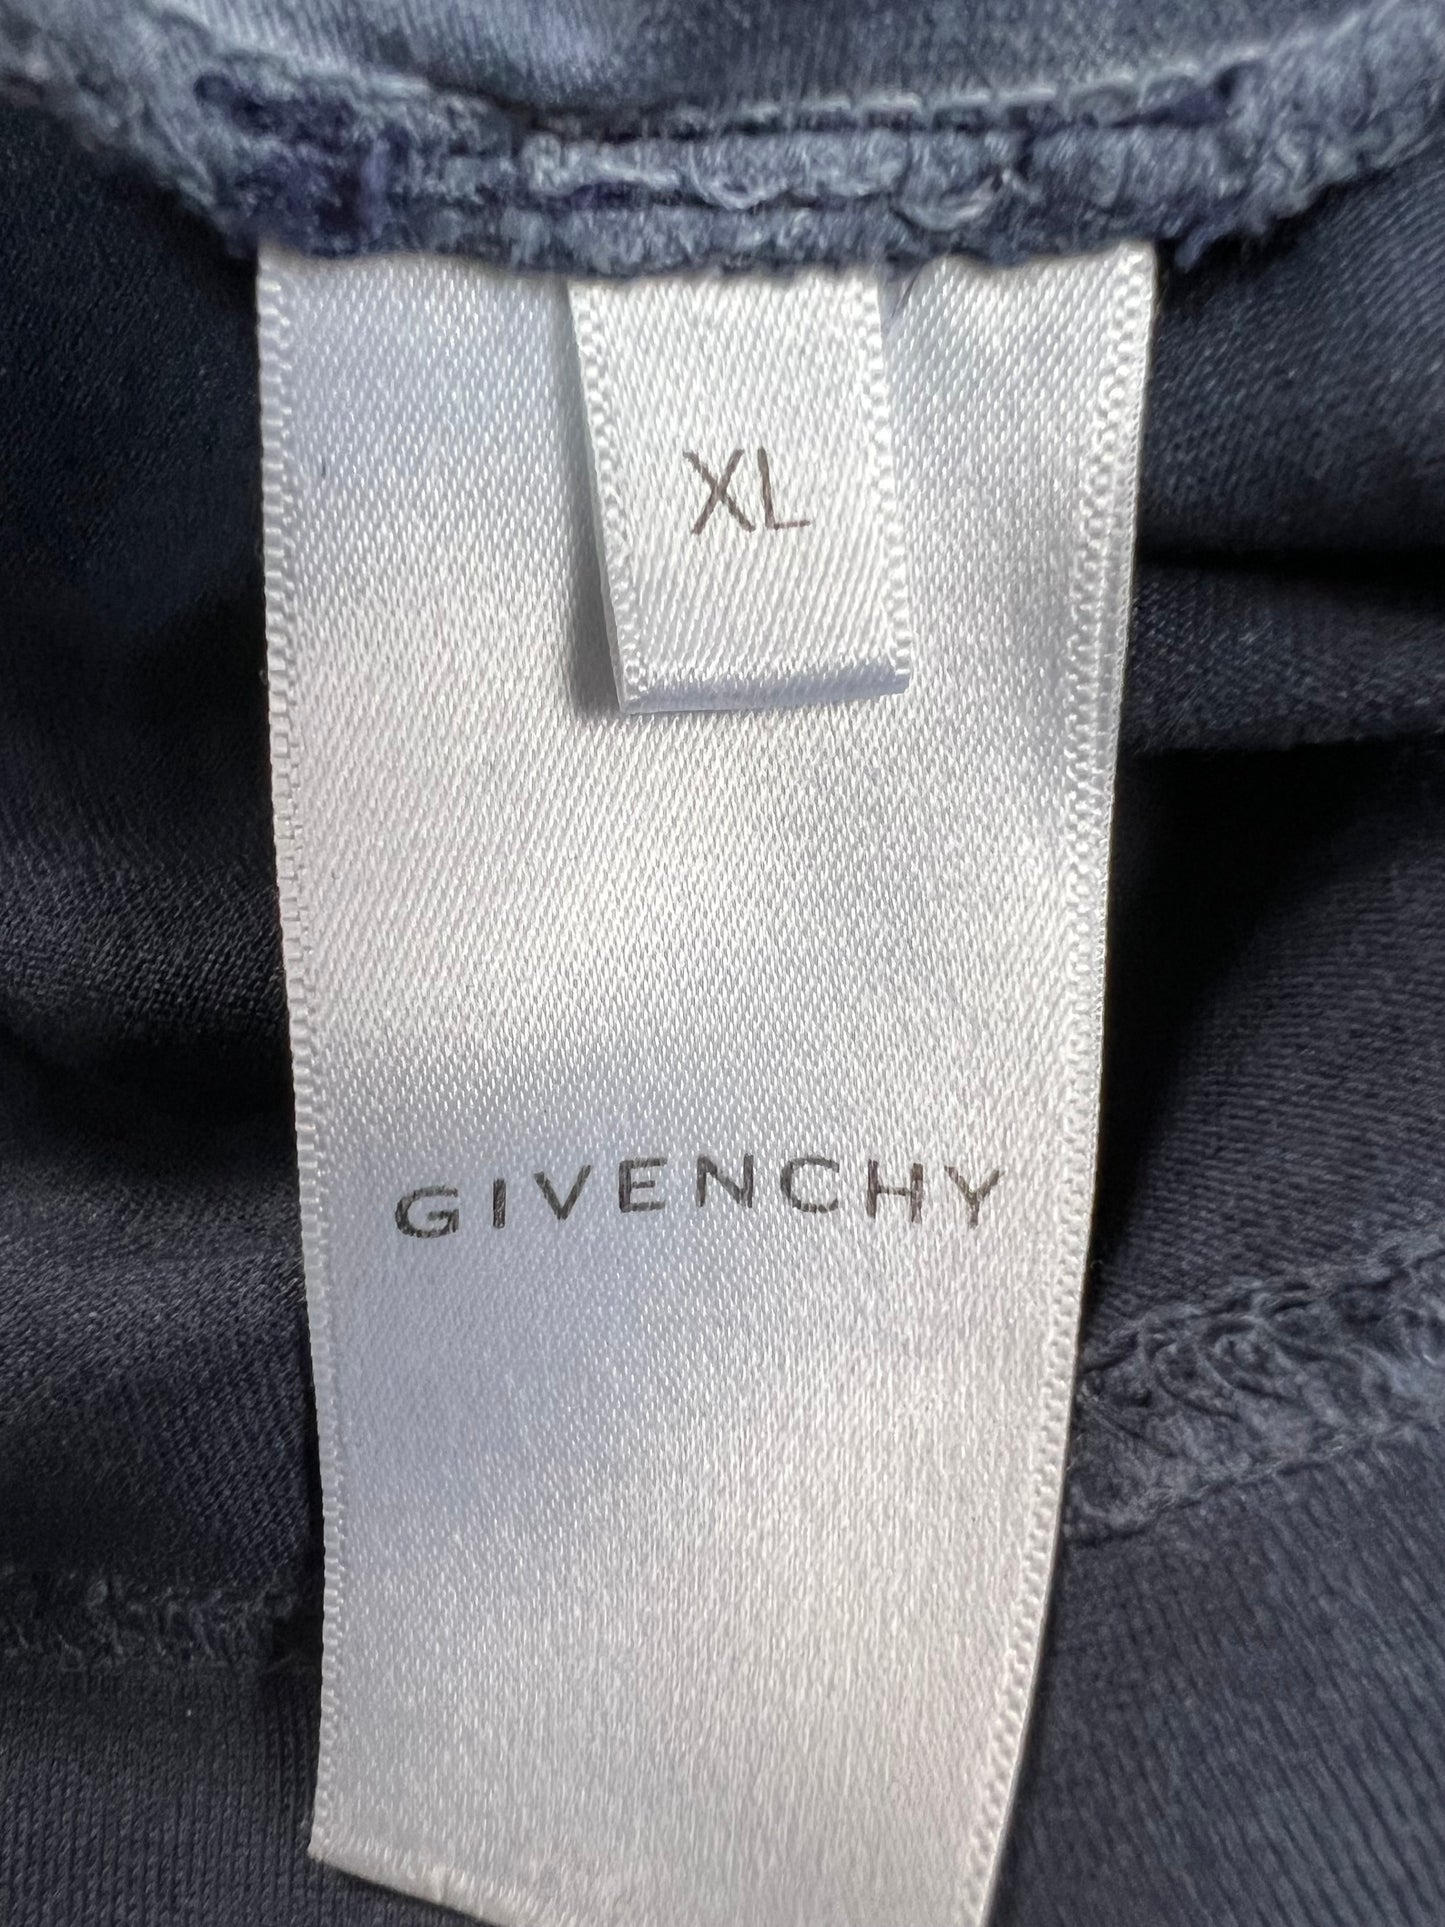 Givenchy Chito graffiti sprayed dog T-Shirt SZ:XL